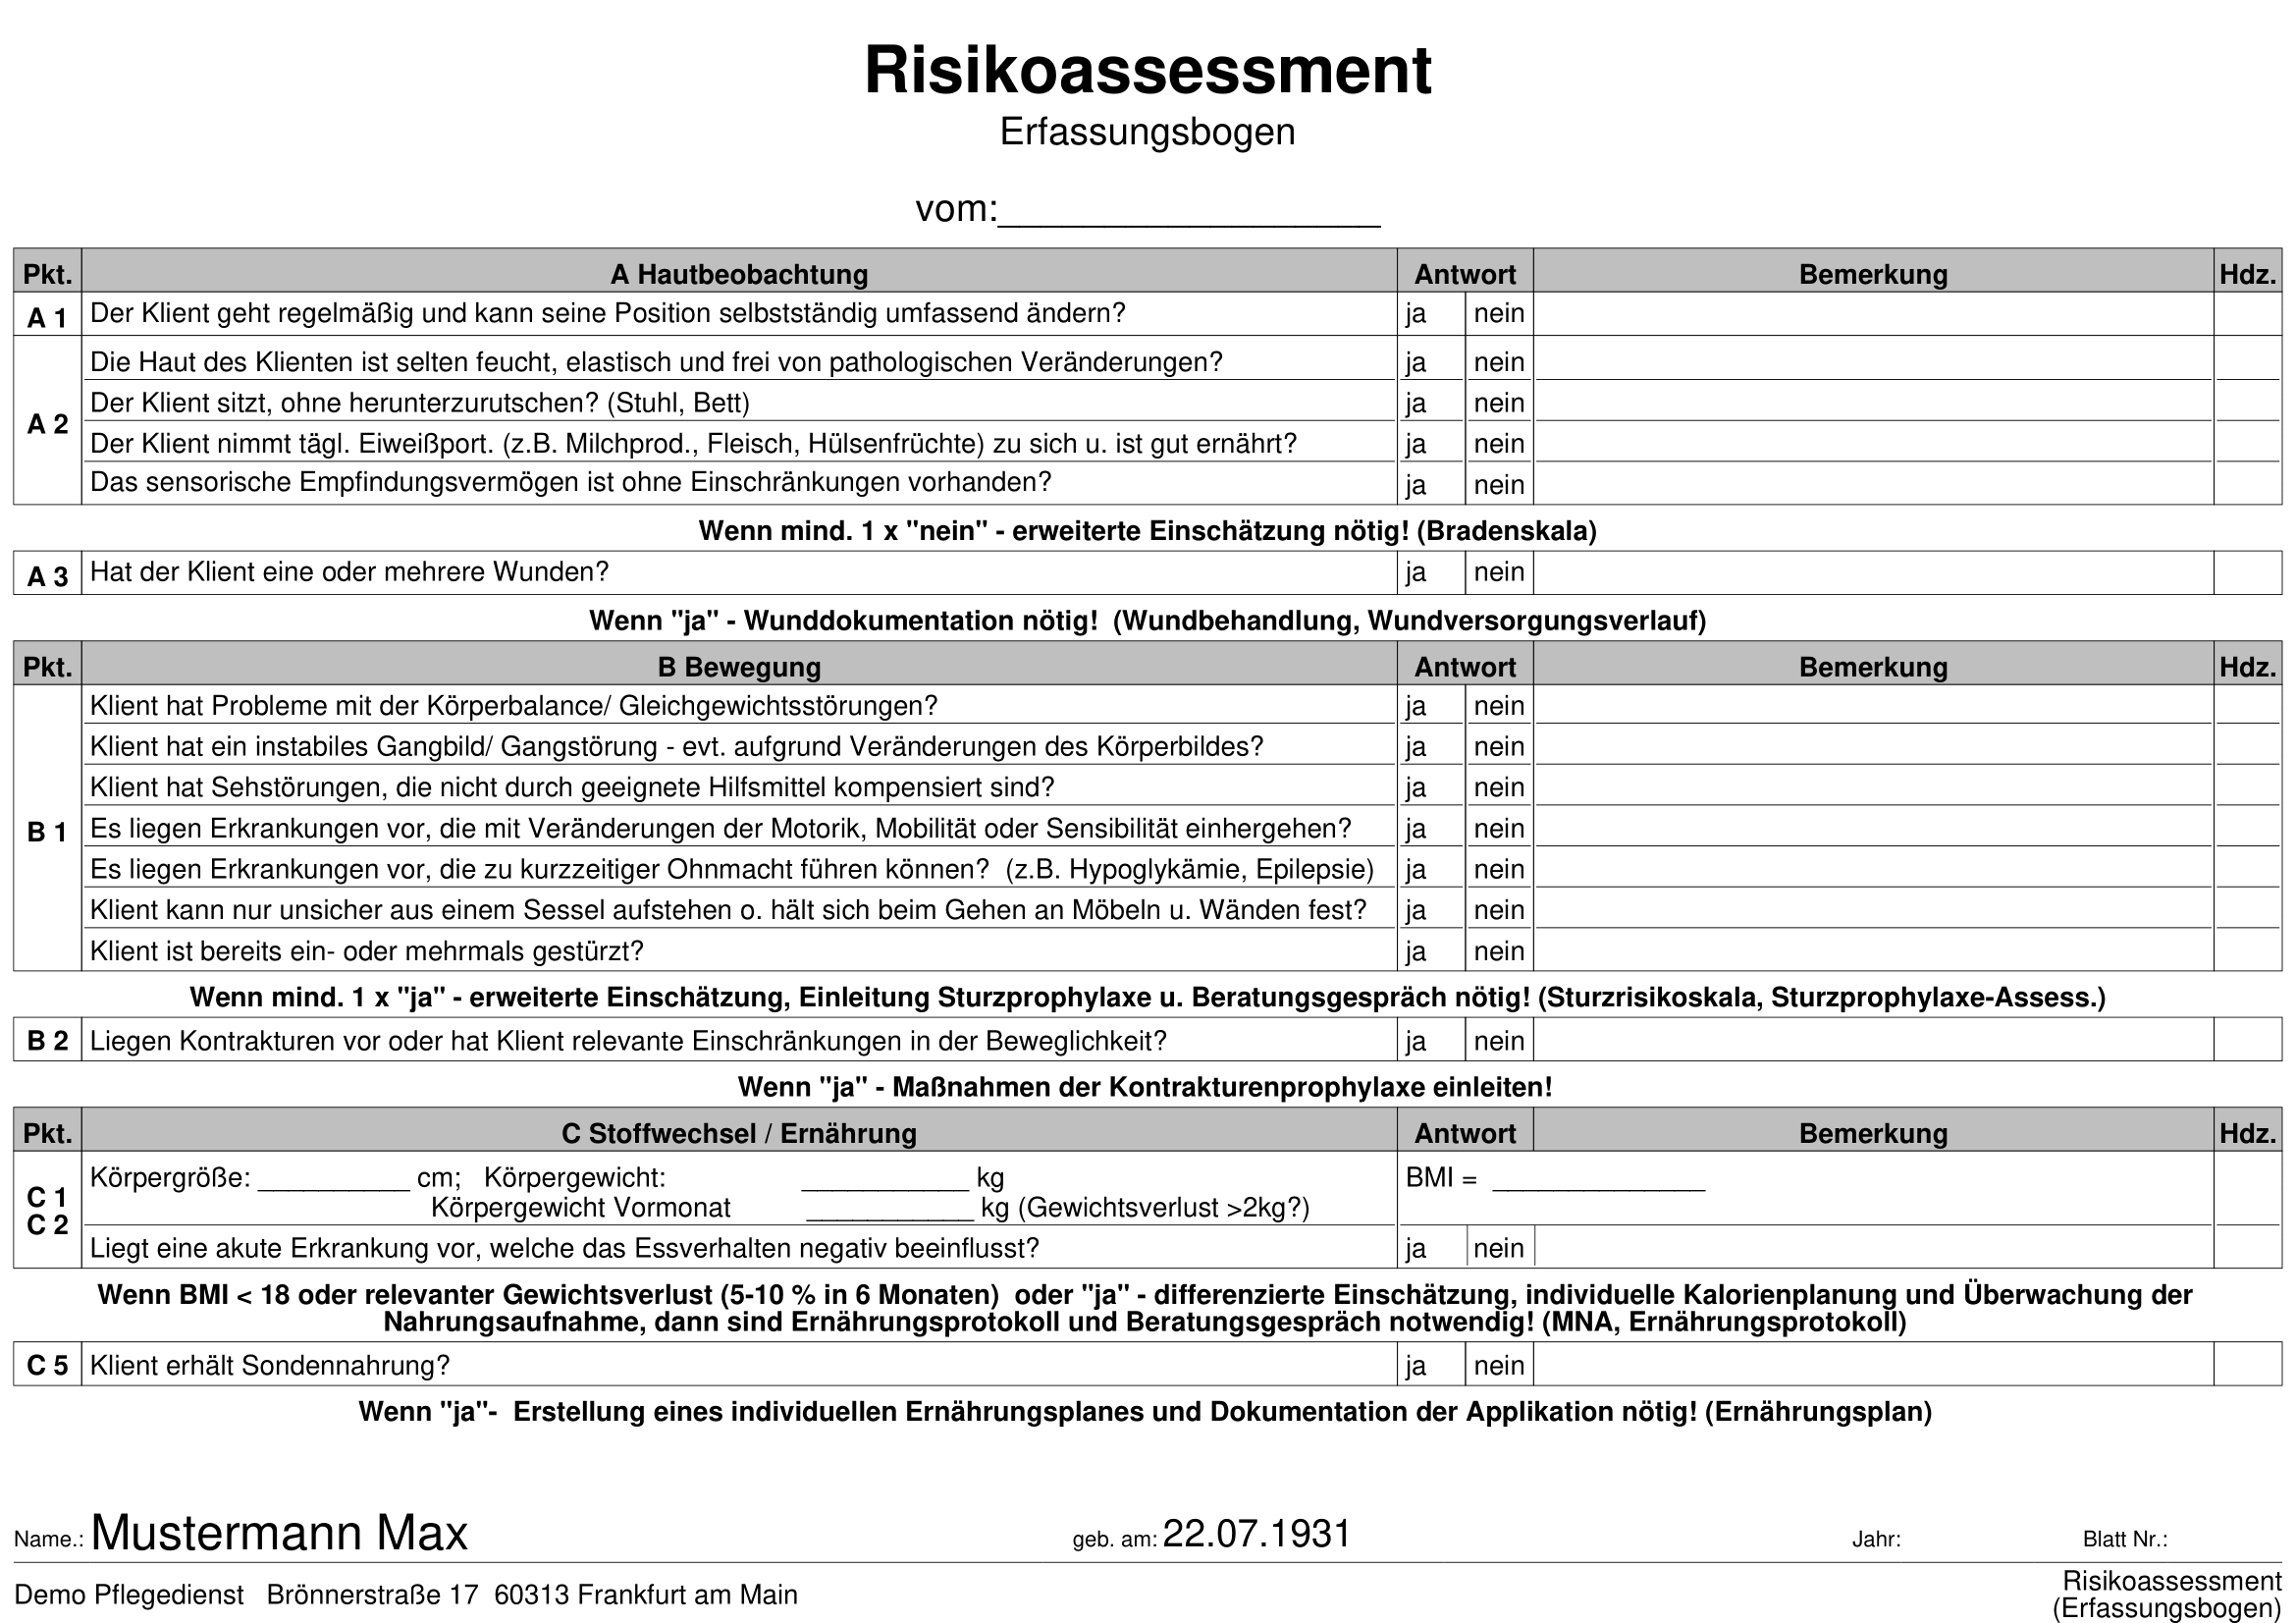 Risikoassessment (Erfassungsbogen)